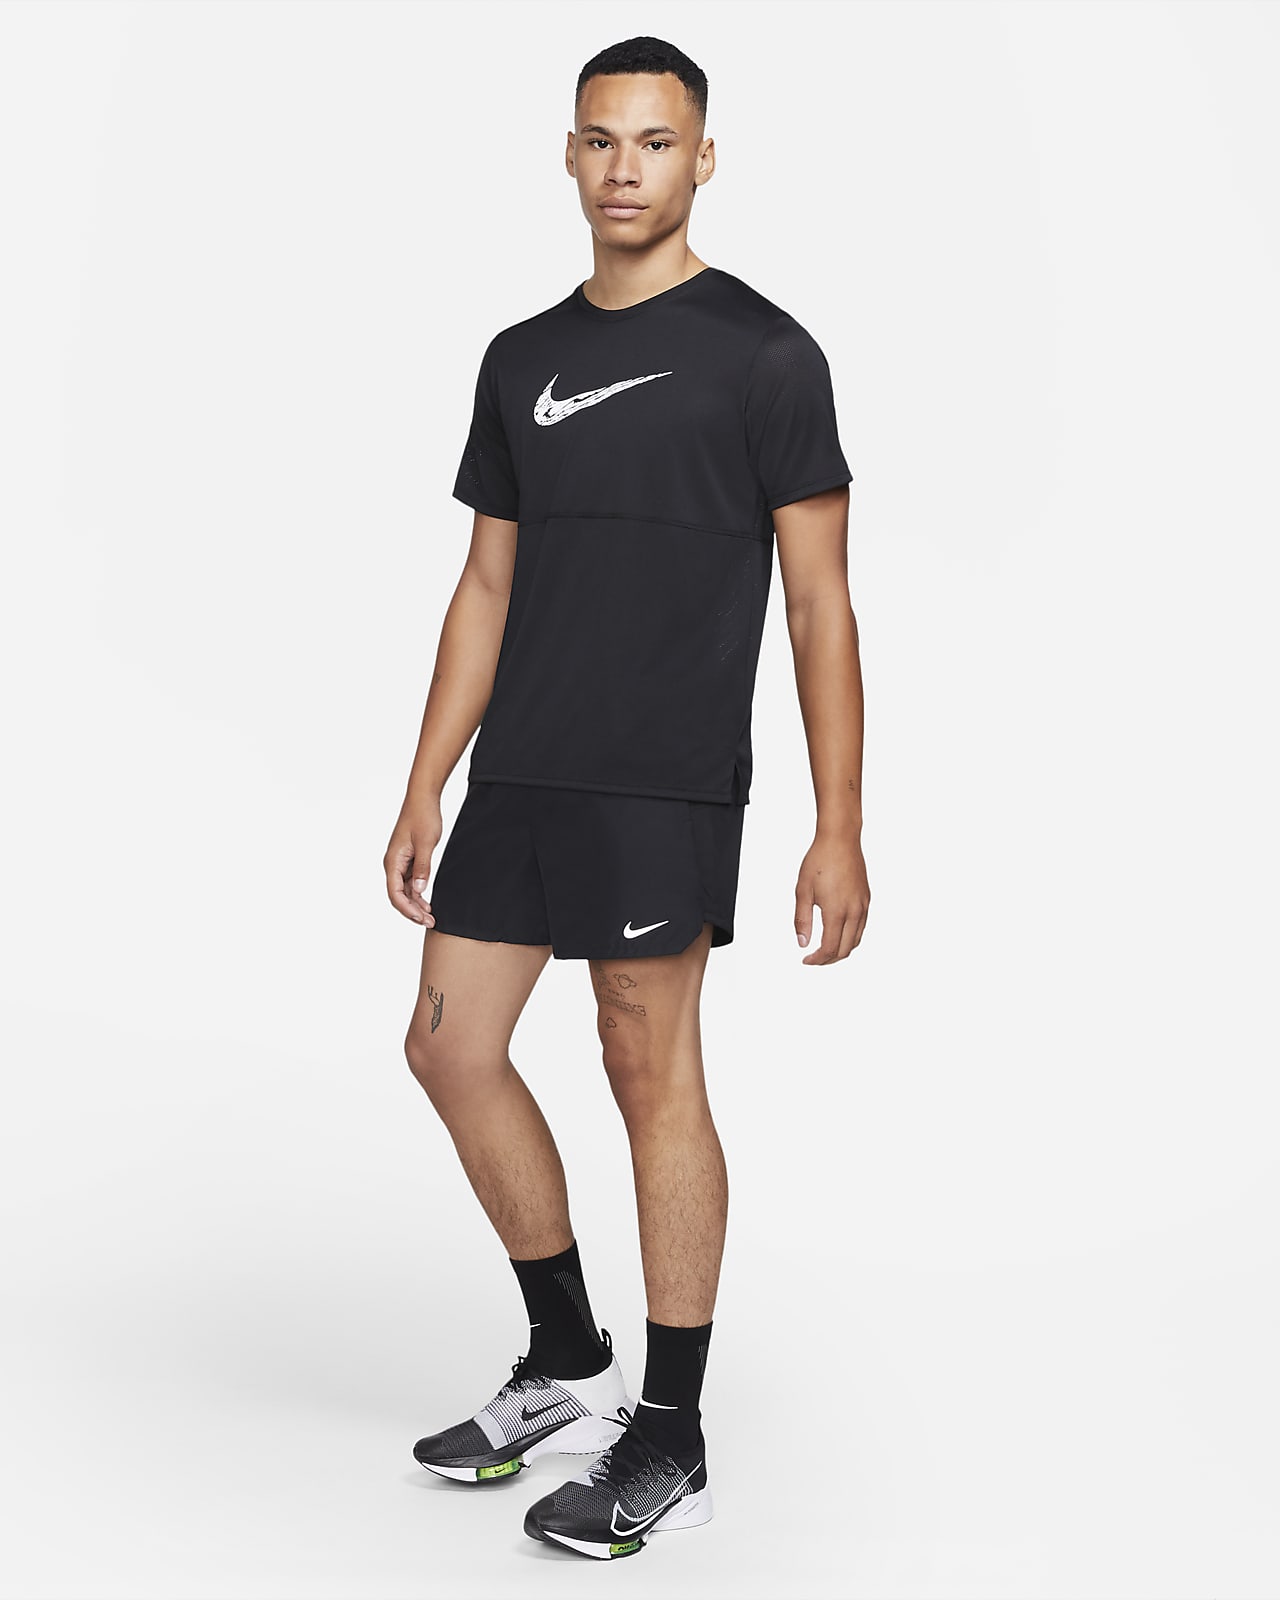 Shorts Nike Challenger - Masculino - Fátima Esportes